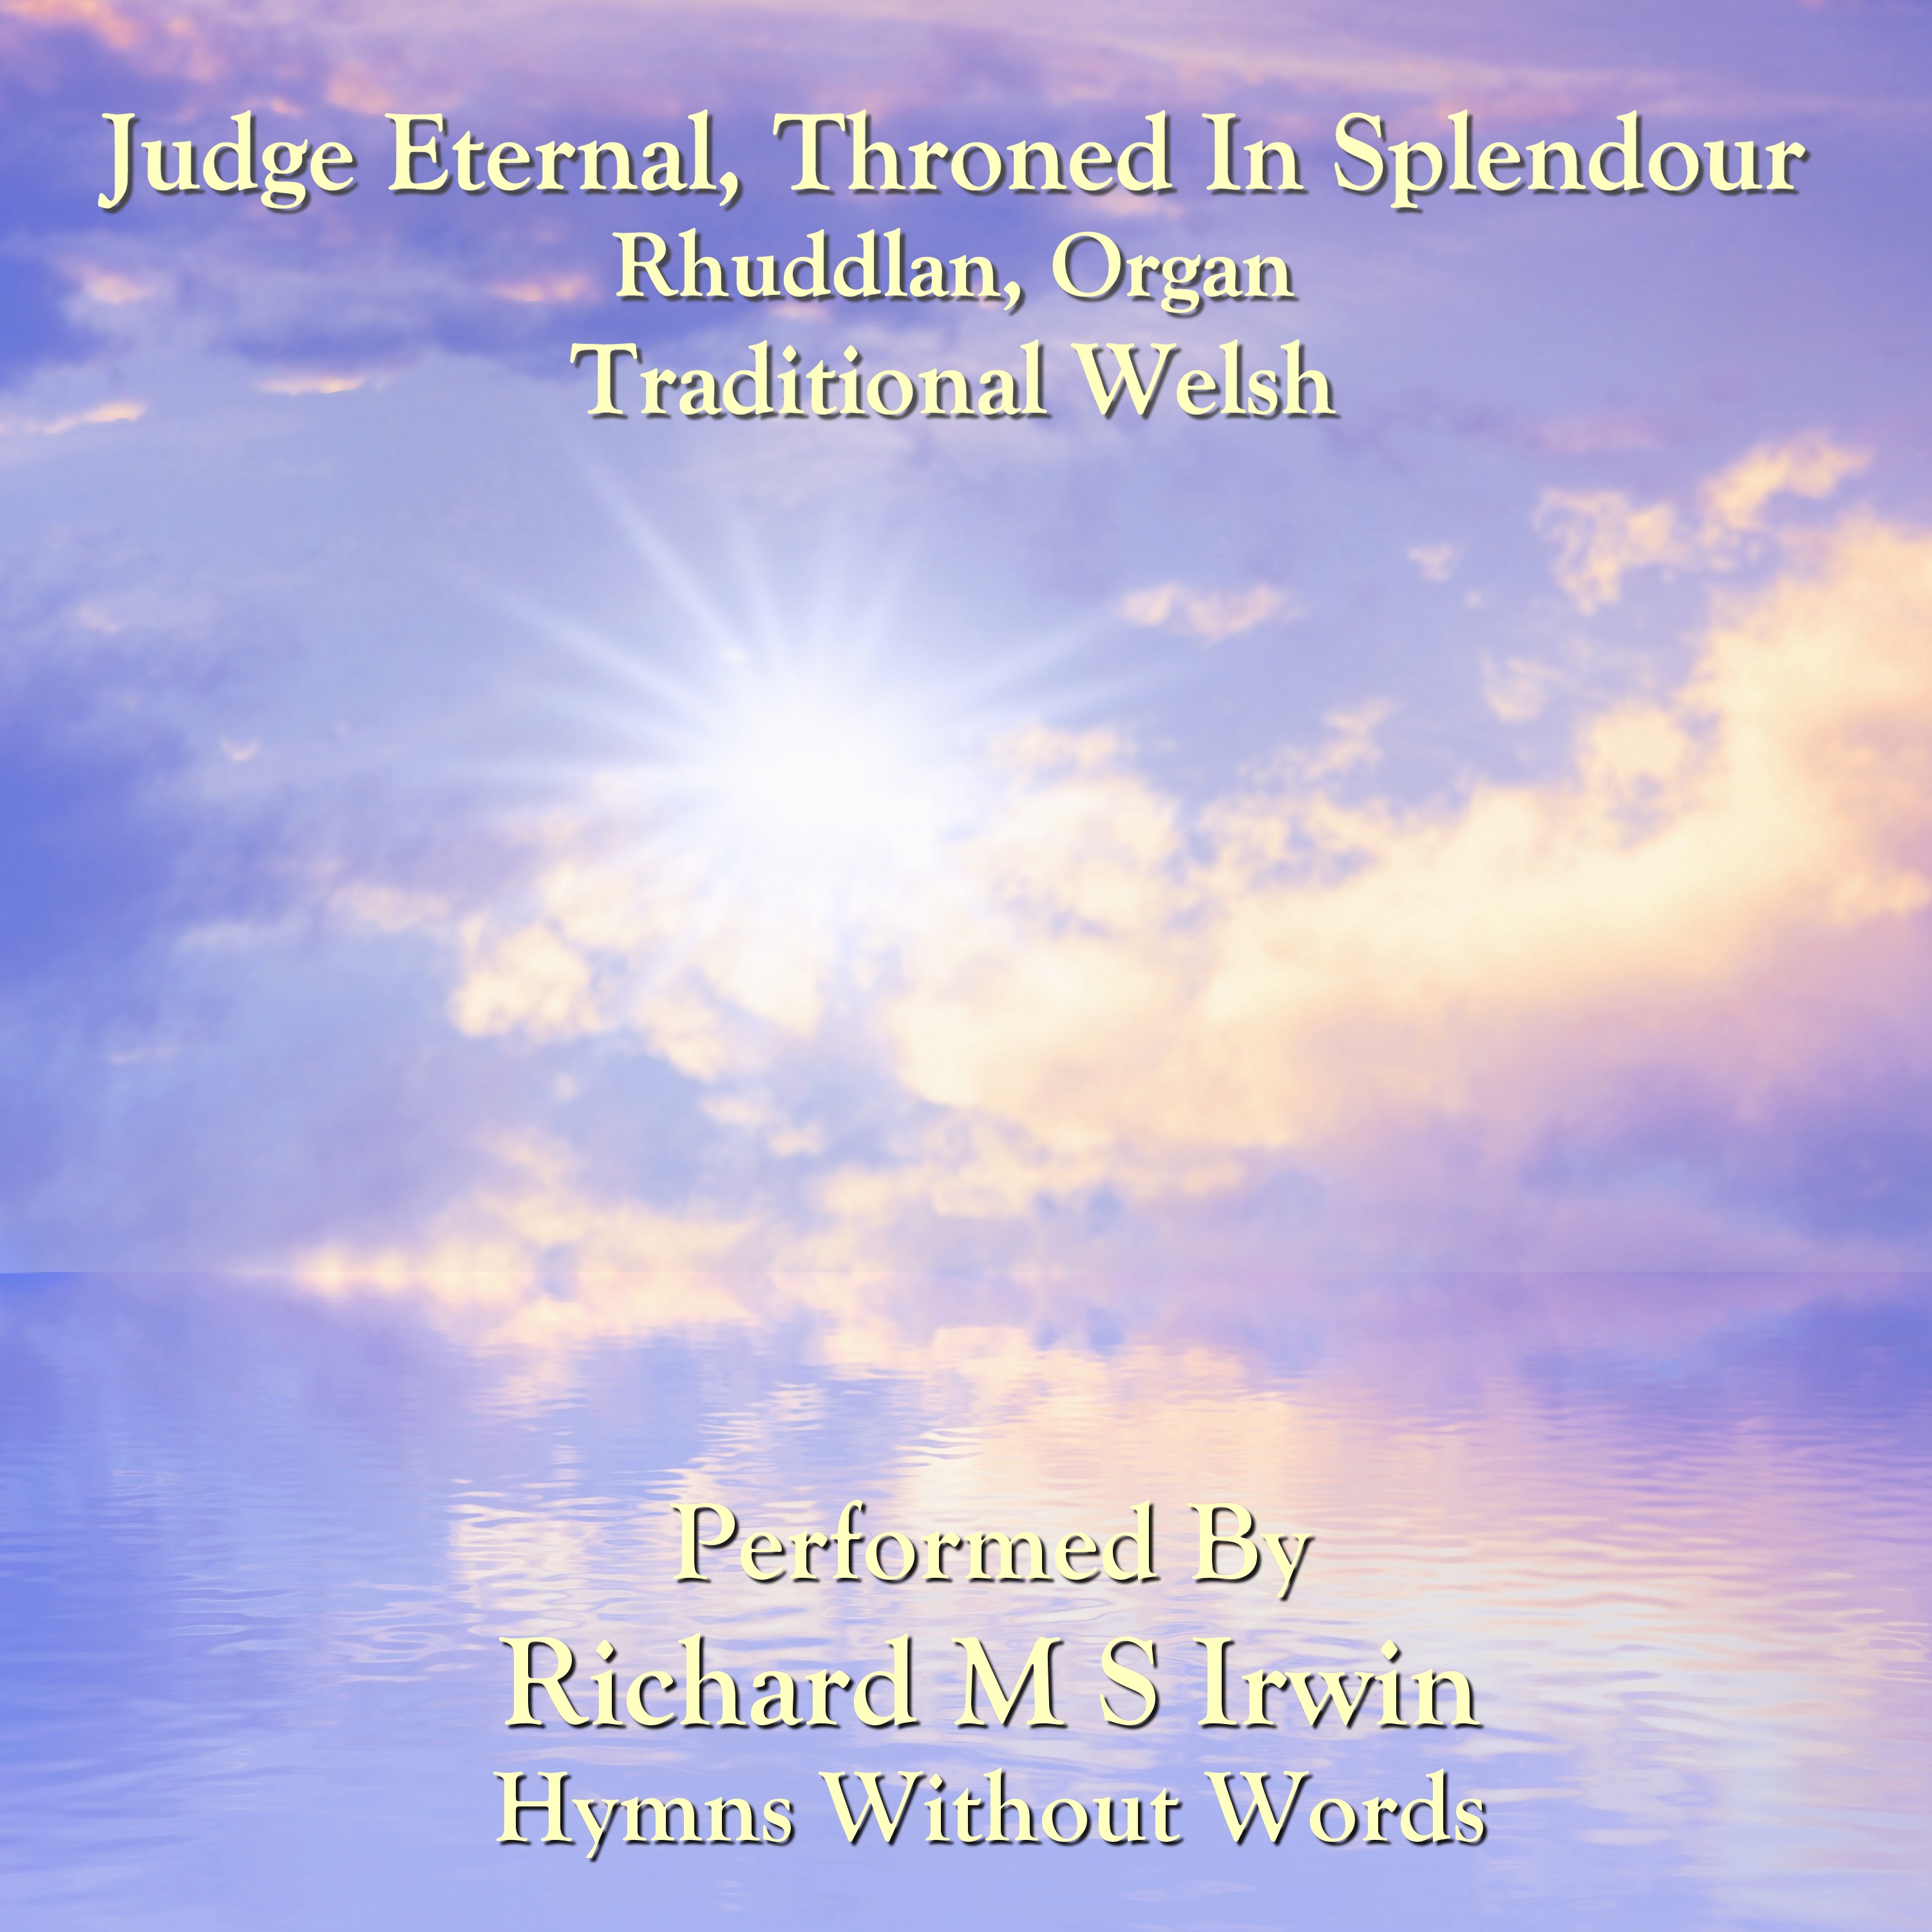 Judge Eternal, Throned In Splendour